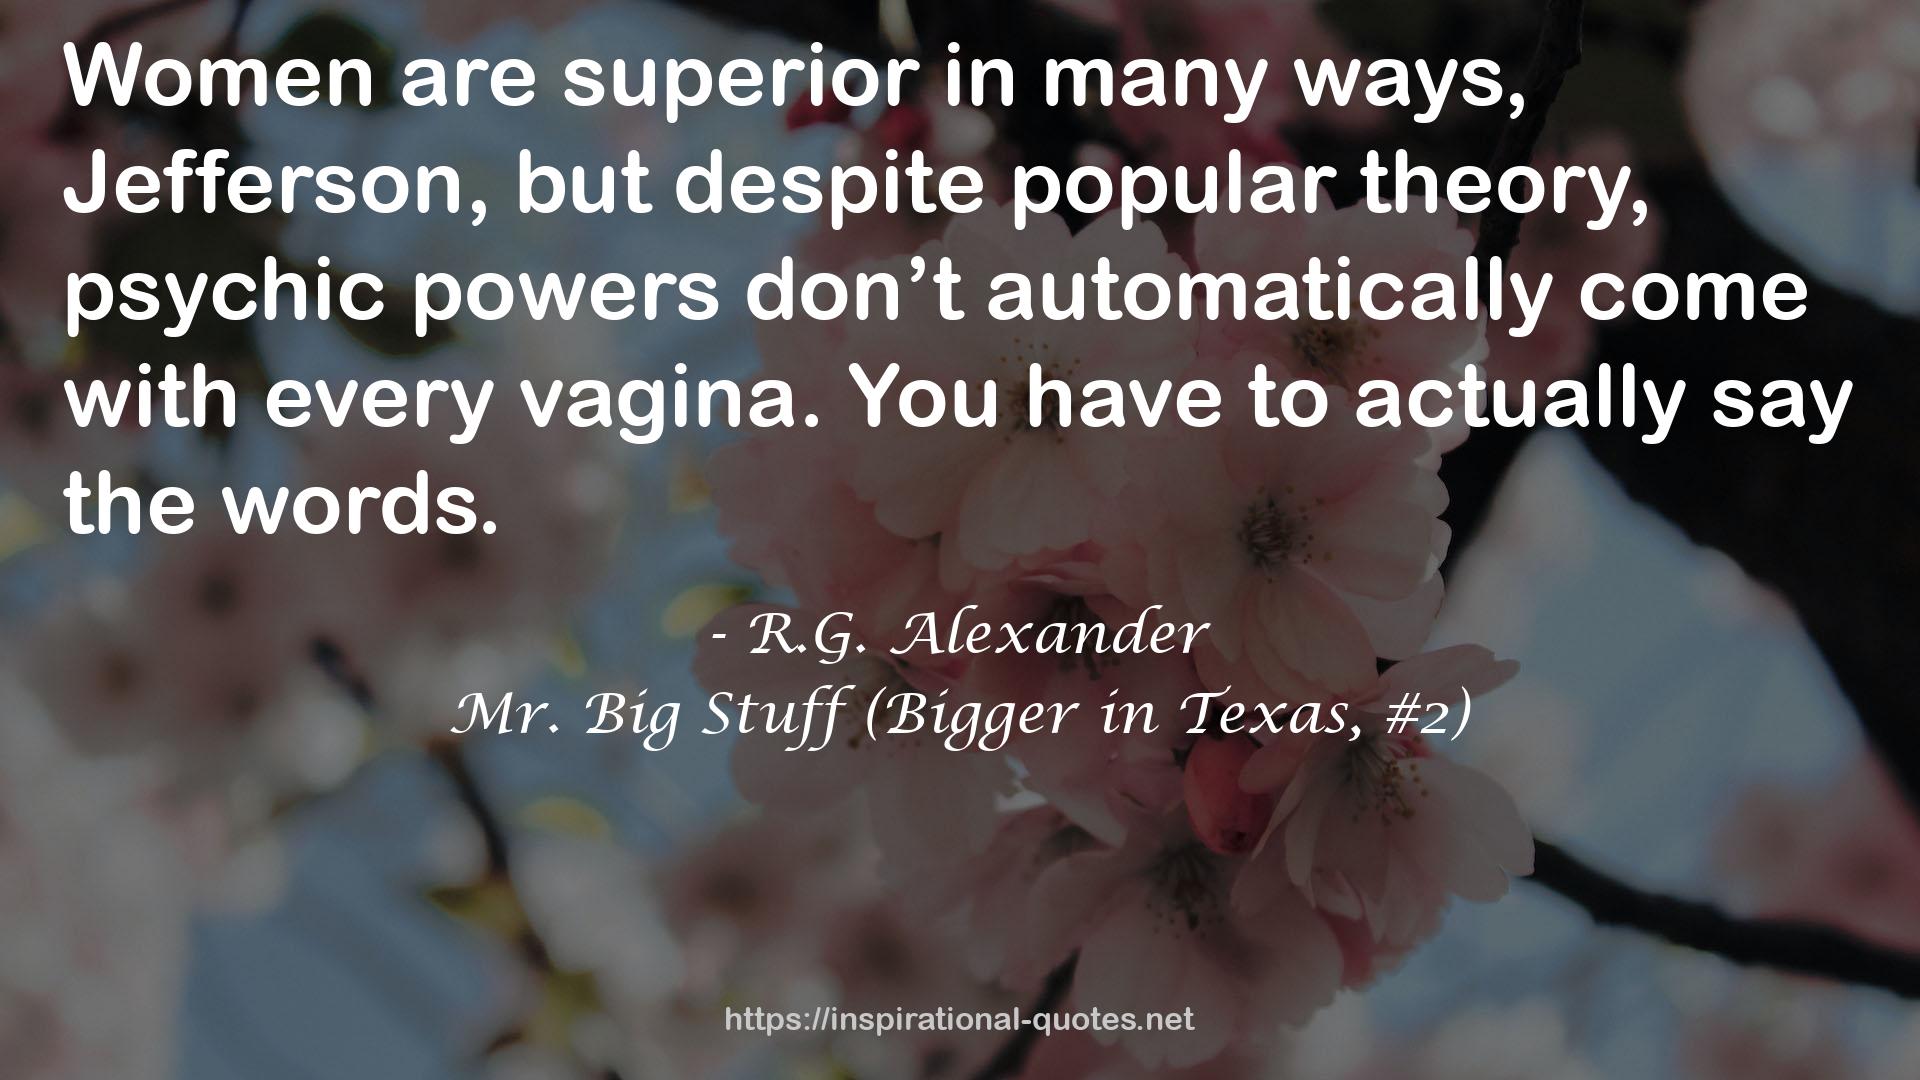 Mr. Big Stuff (Bigger in Texas, #2) QUOTES